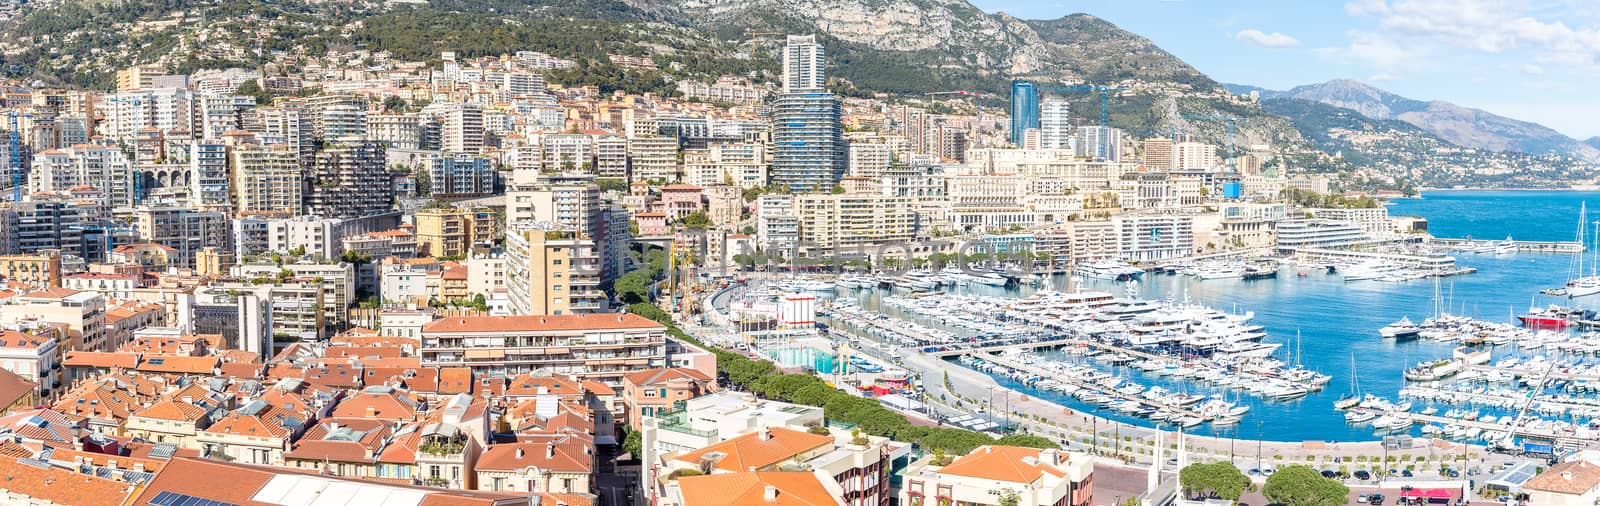 Monaco Monte Carlo panorama by vichie81